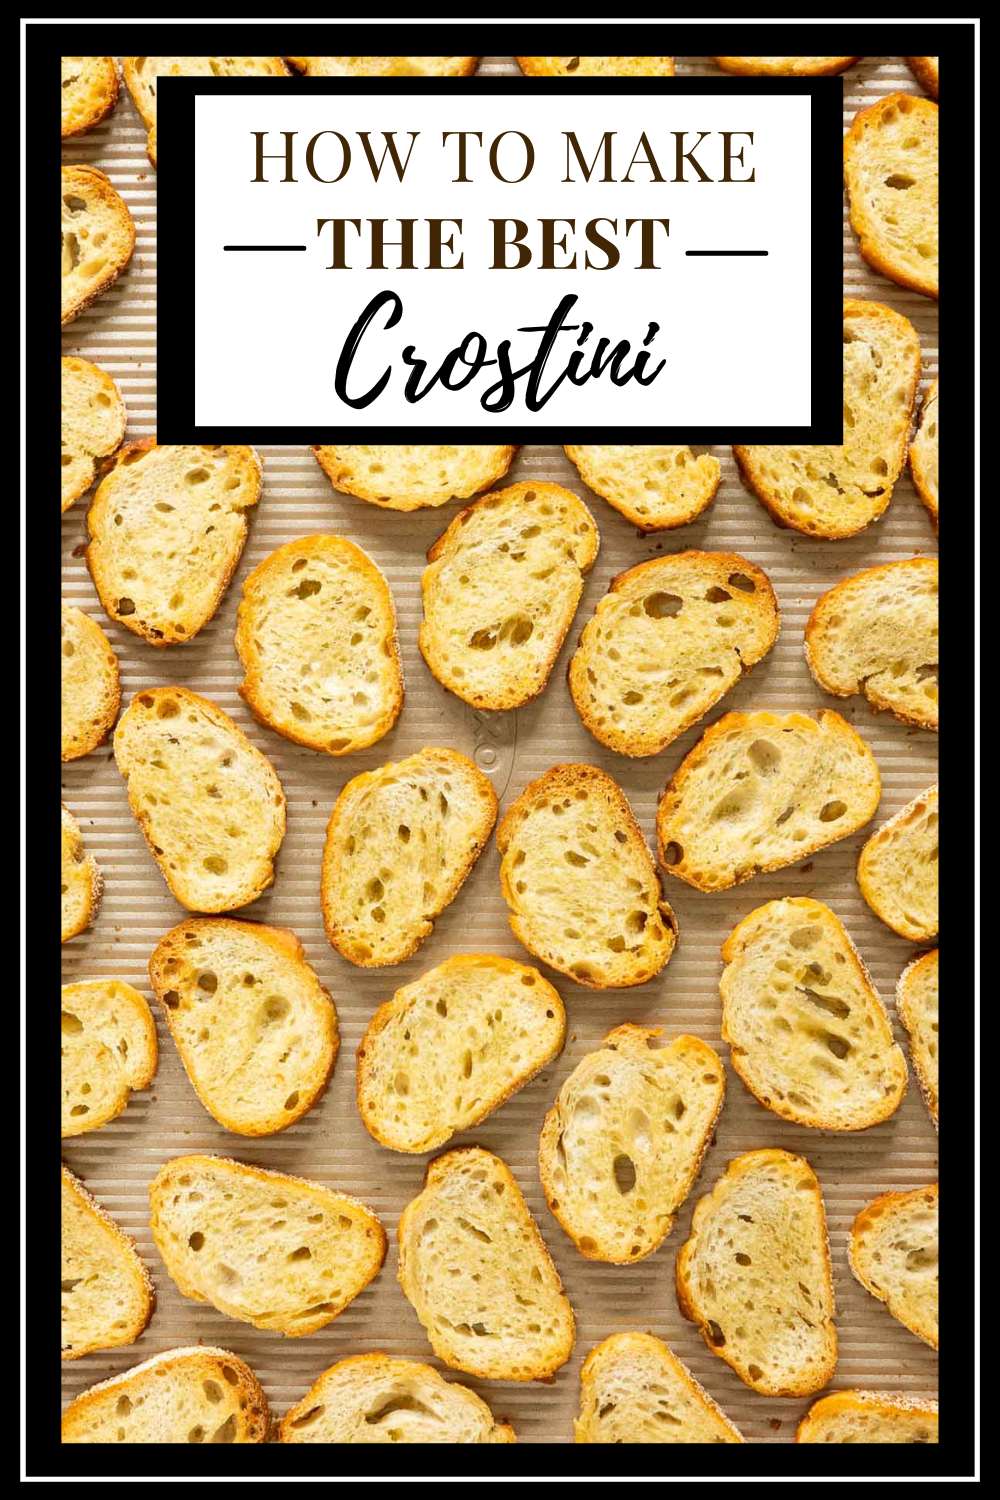 The BEST Homemade Crostini